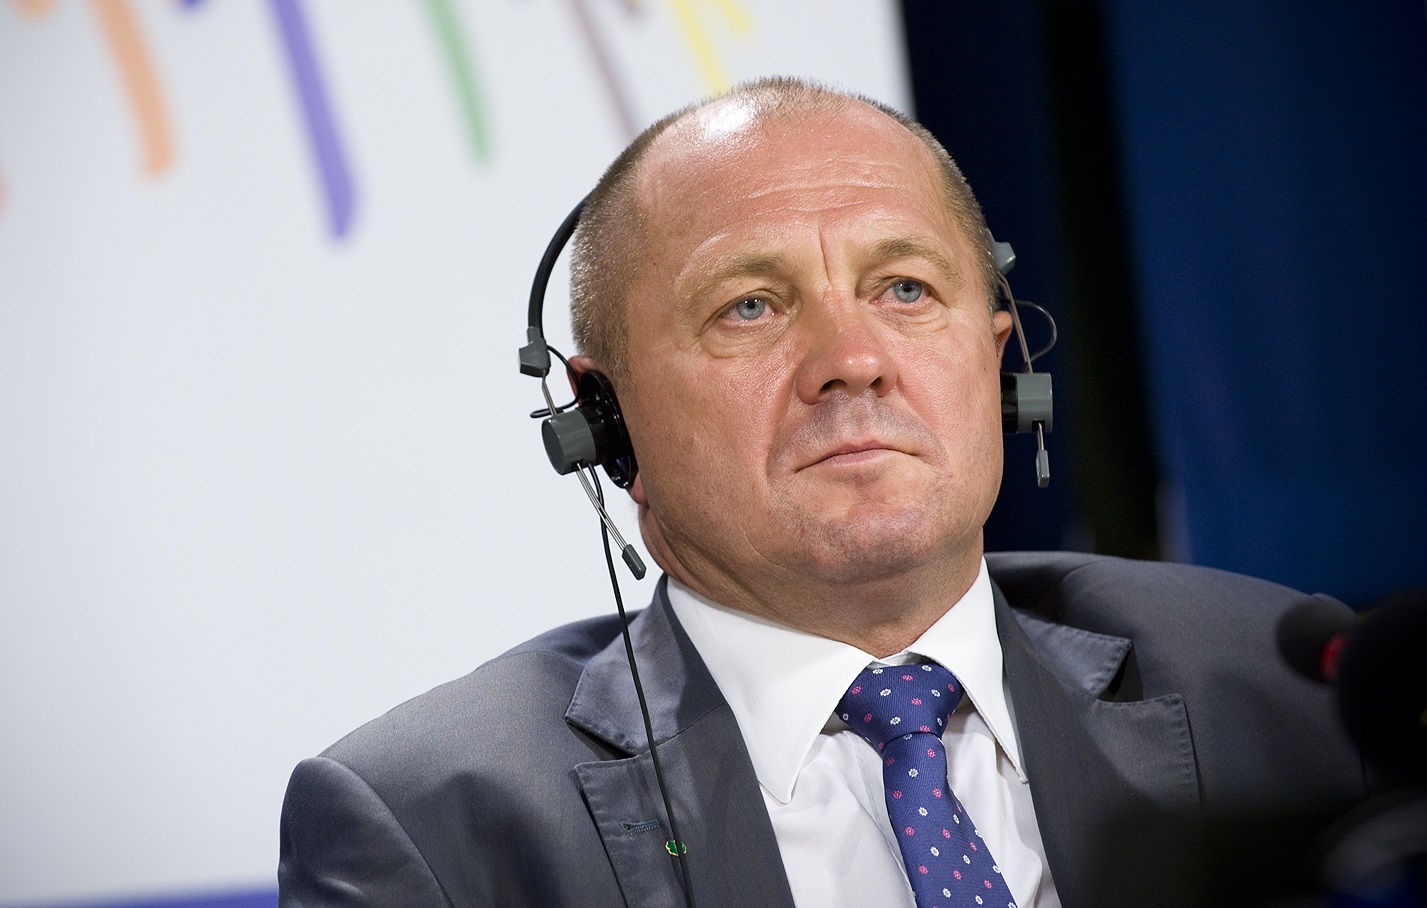 Marek Sawicki/Fot. EPP Group in the European Parliament/CC BY 2.0/Flickr